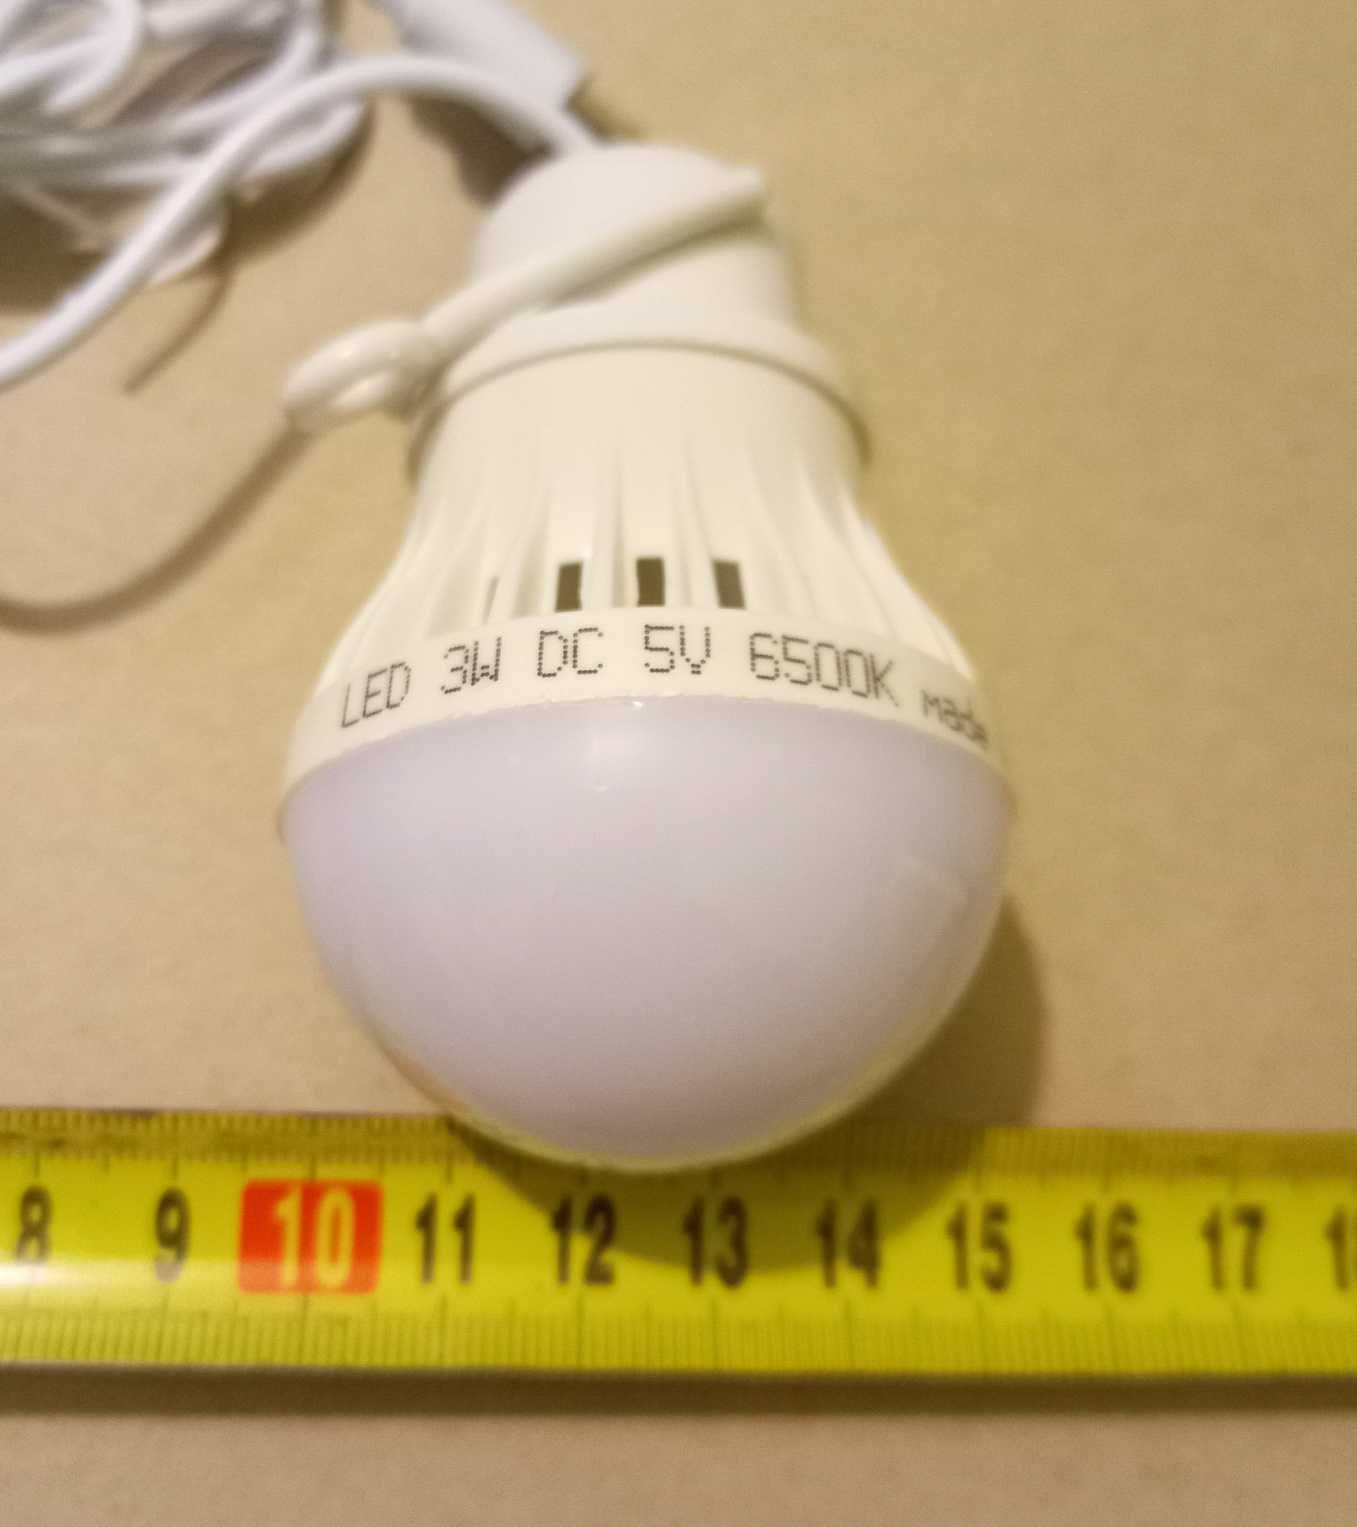 LED USB лампочка 5 вольт світлодіодна лампочка світодіодна USB лампа